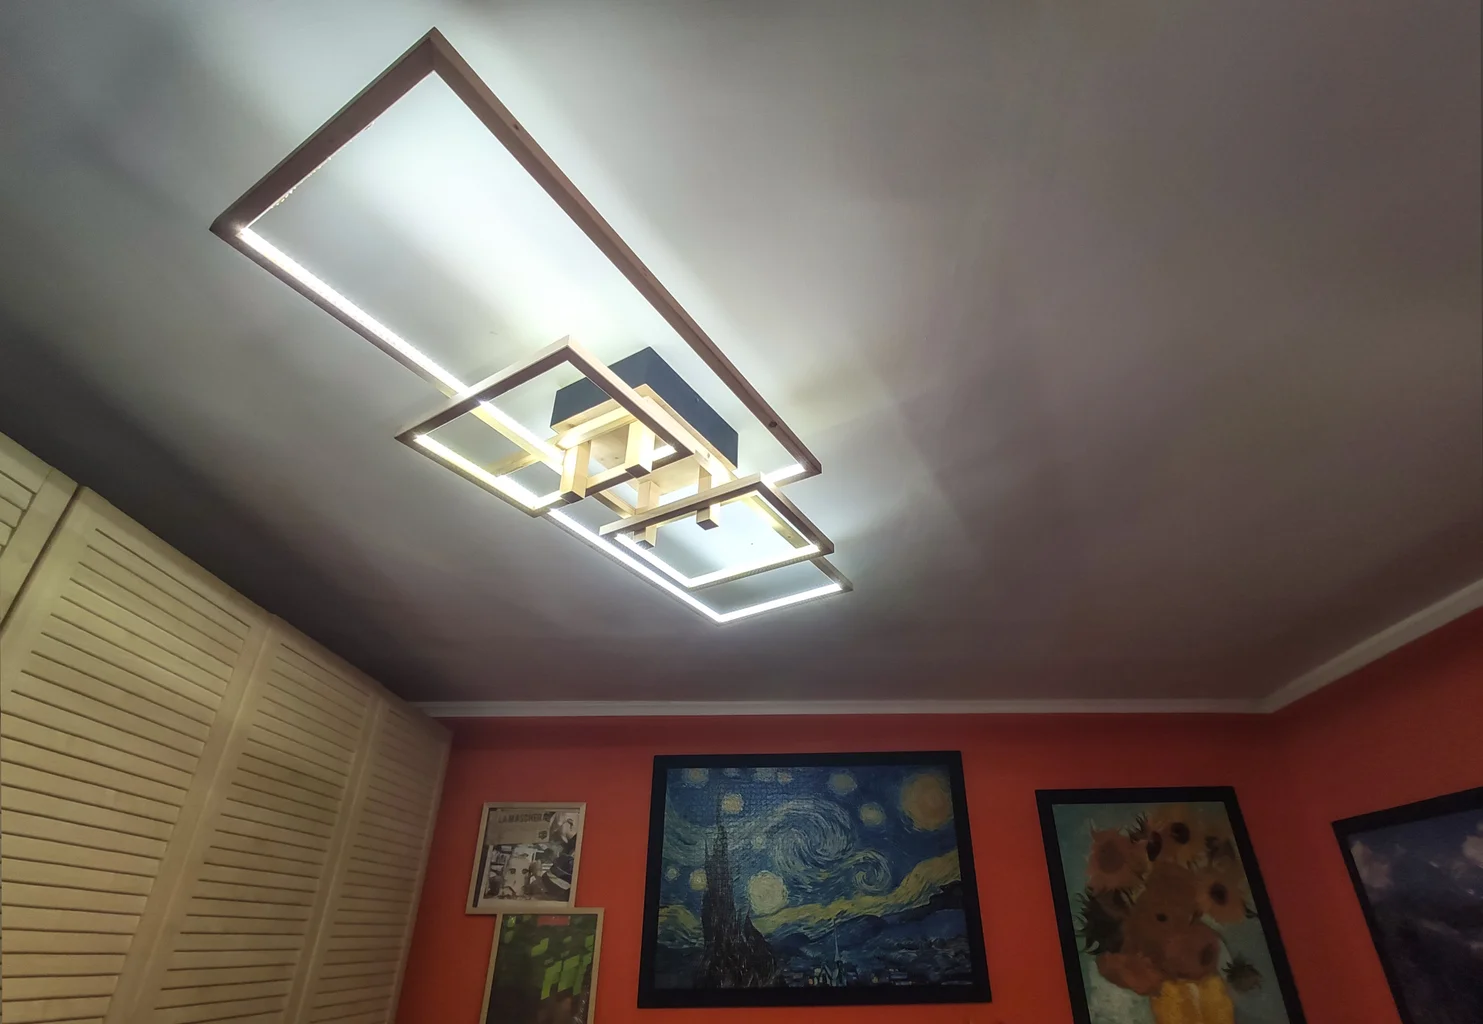 How To Make A Ceiling Light